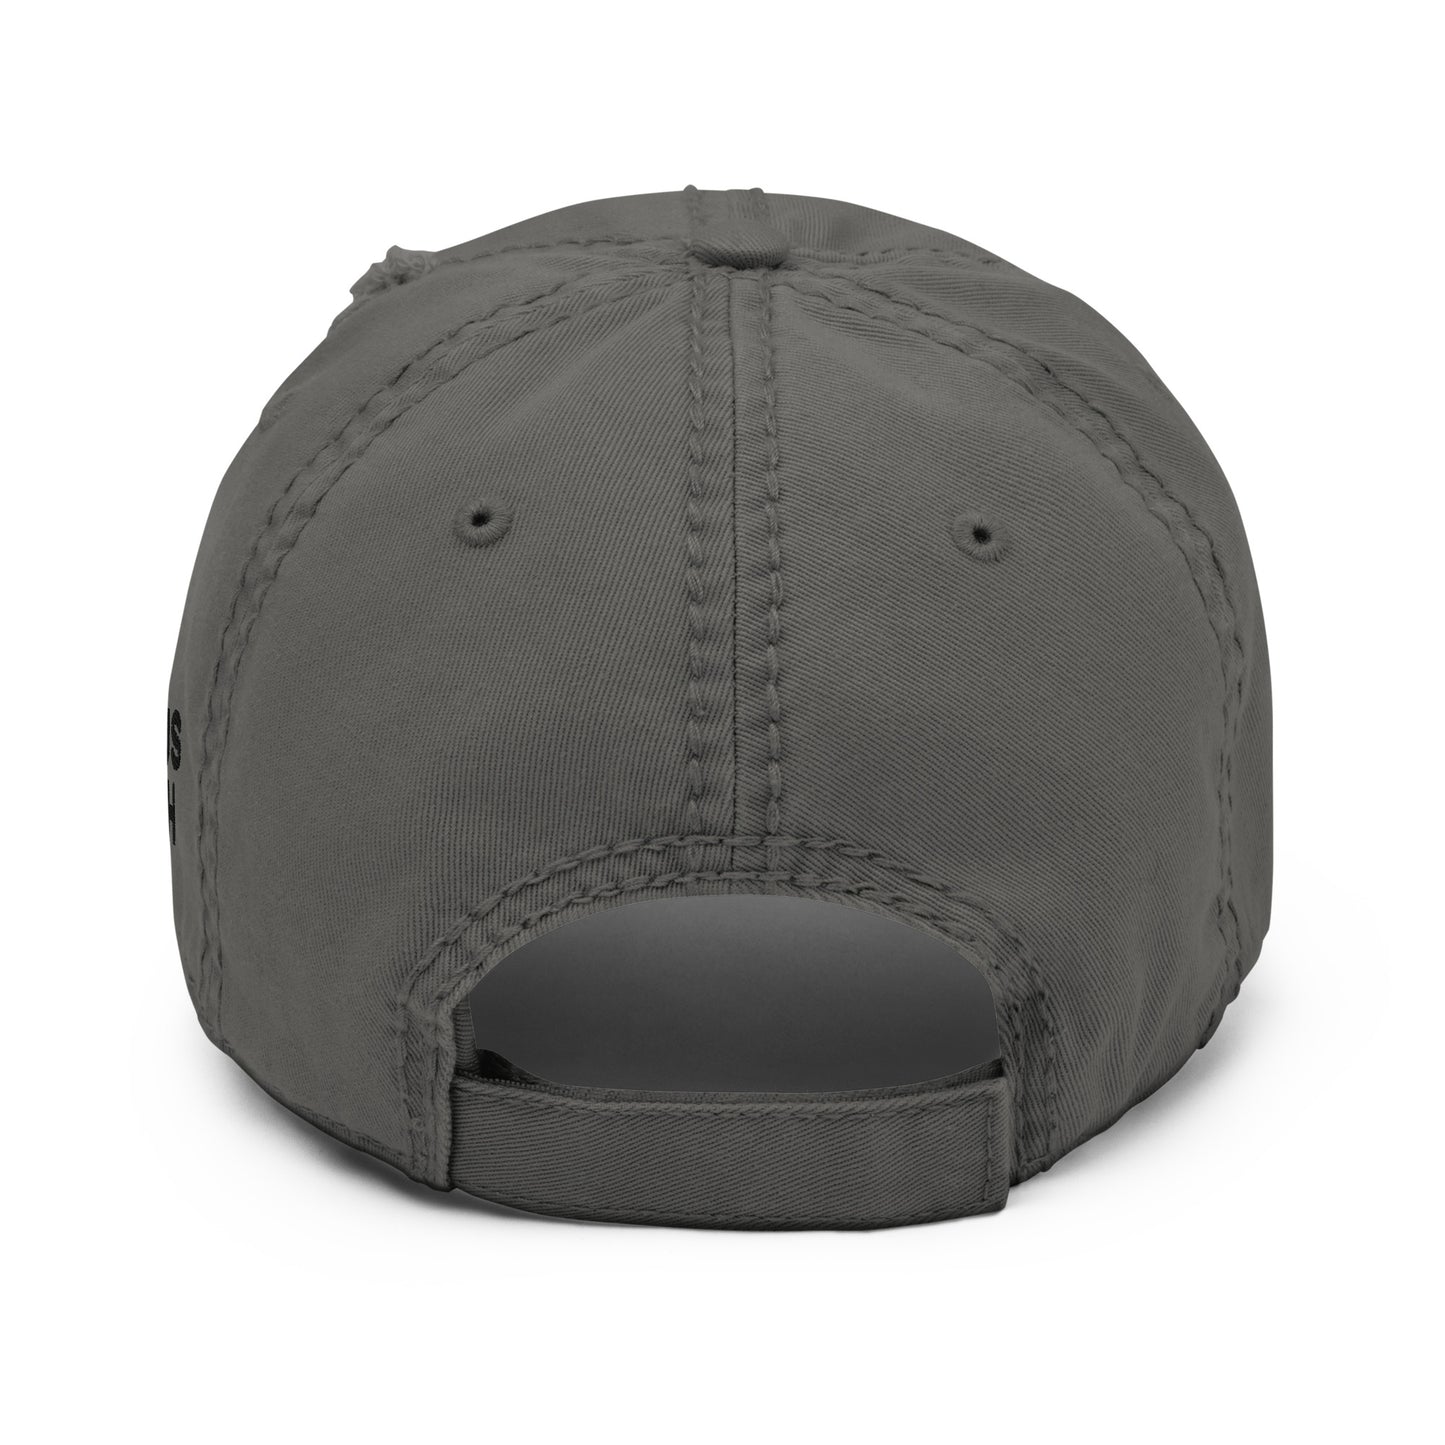 MUSH University - Distressed Dad Hat (Black Stitching)